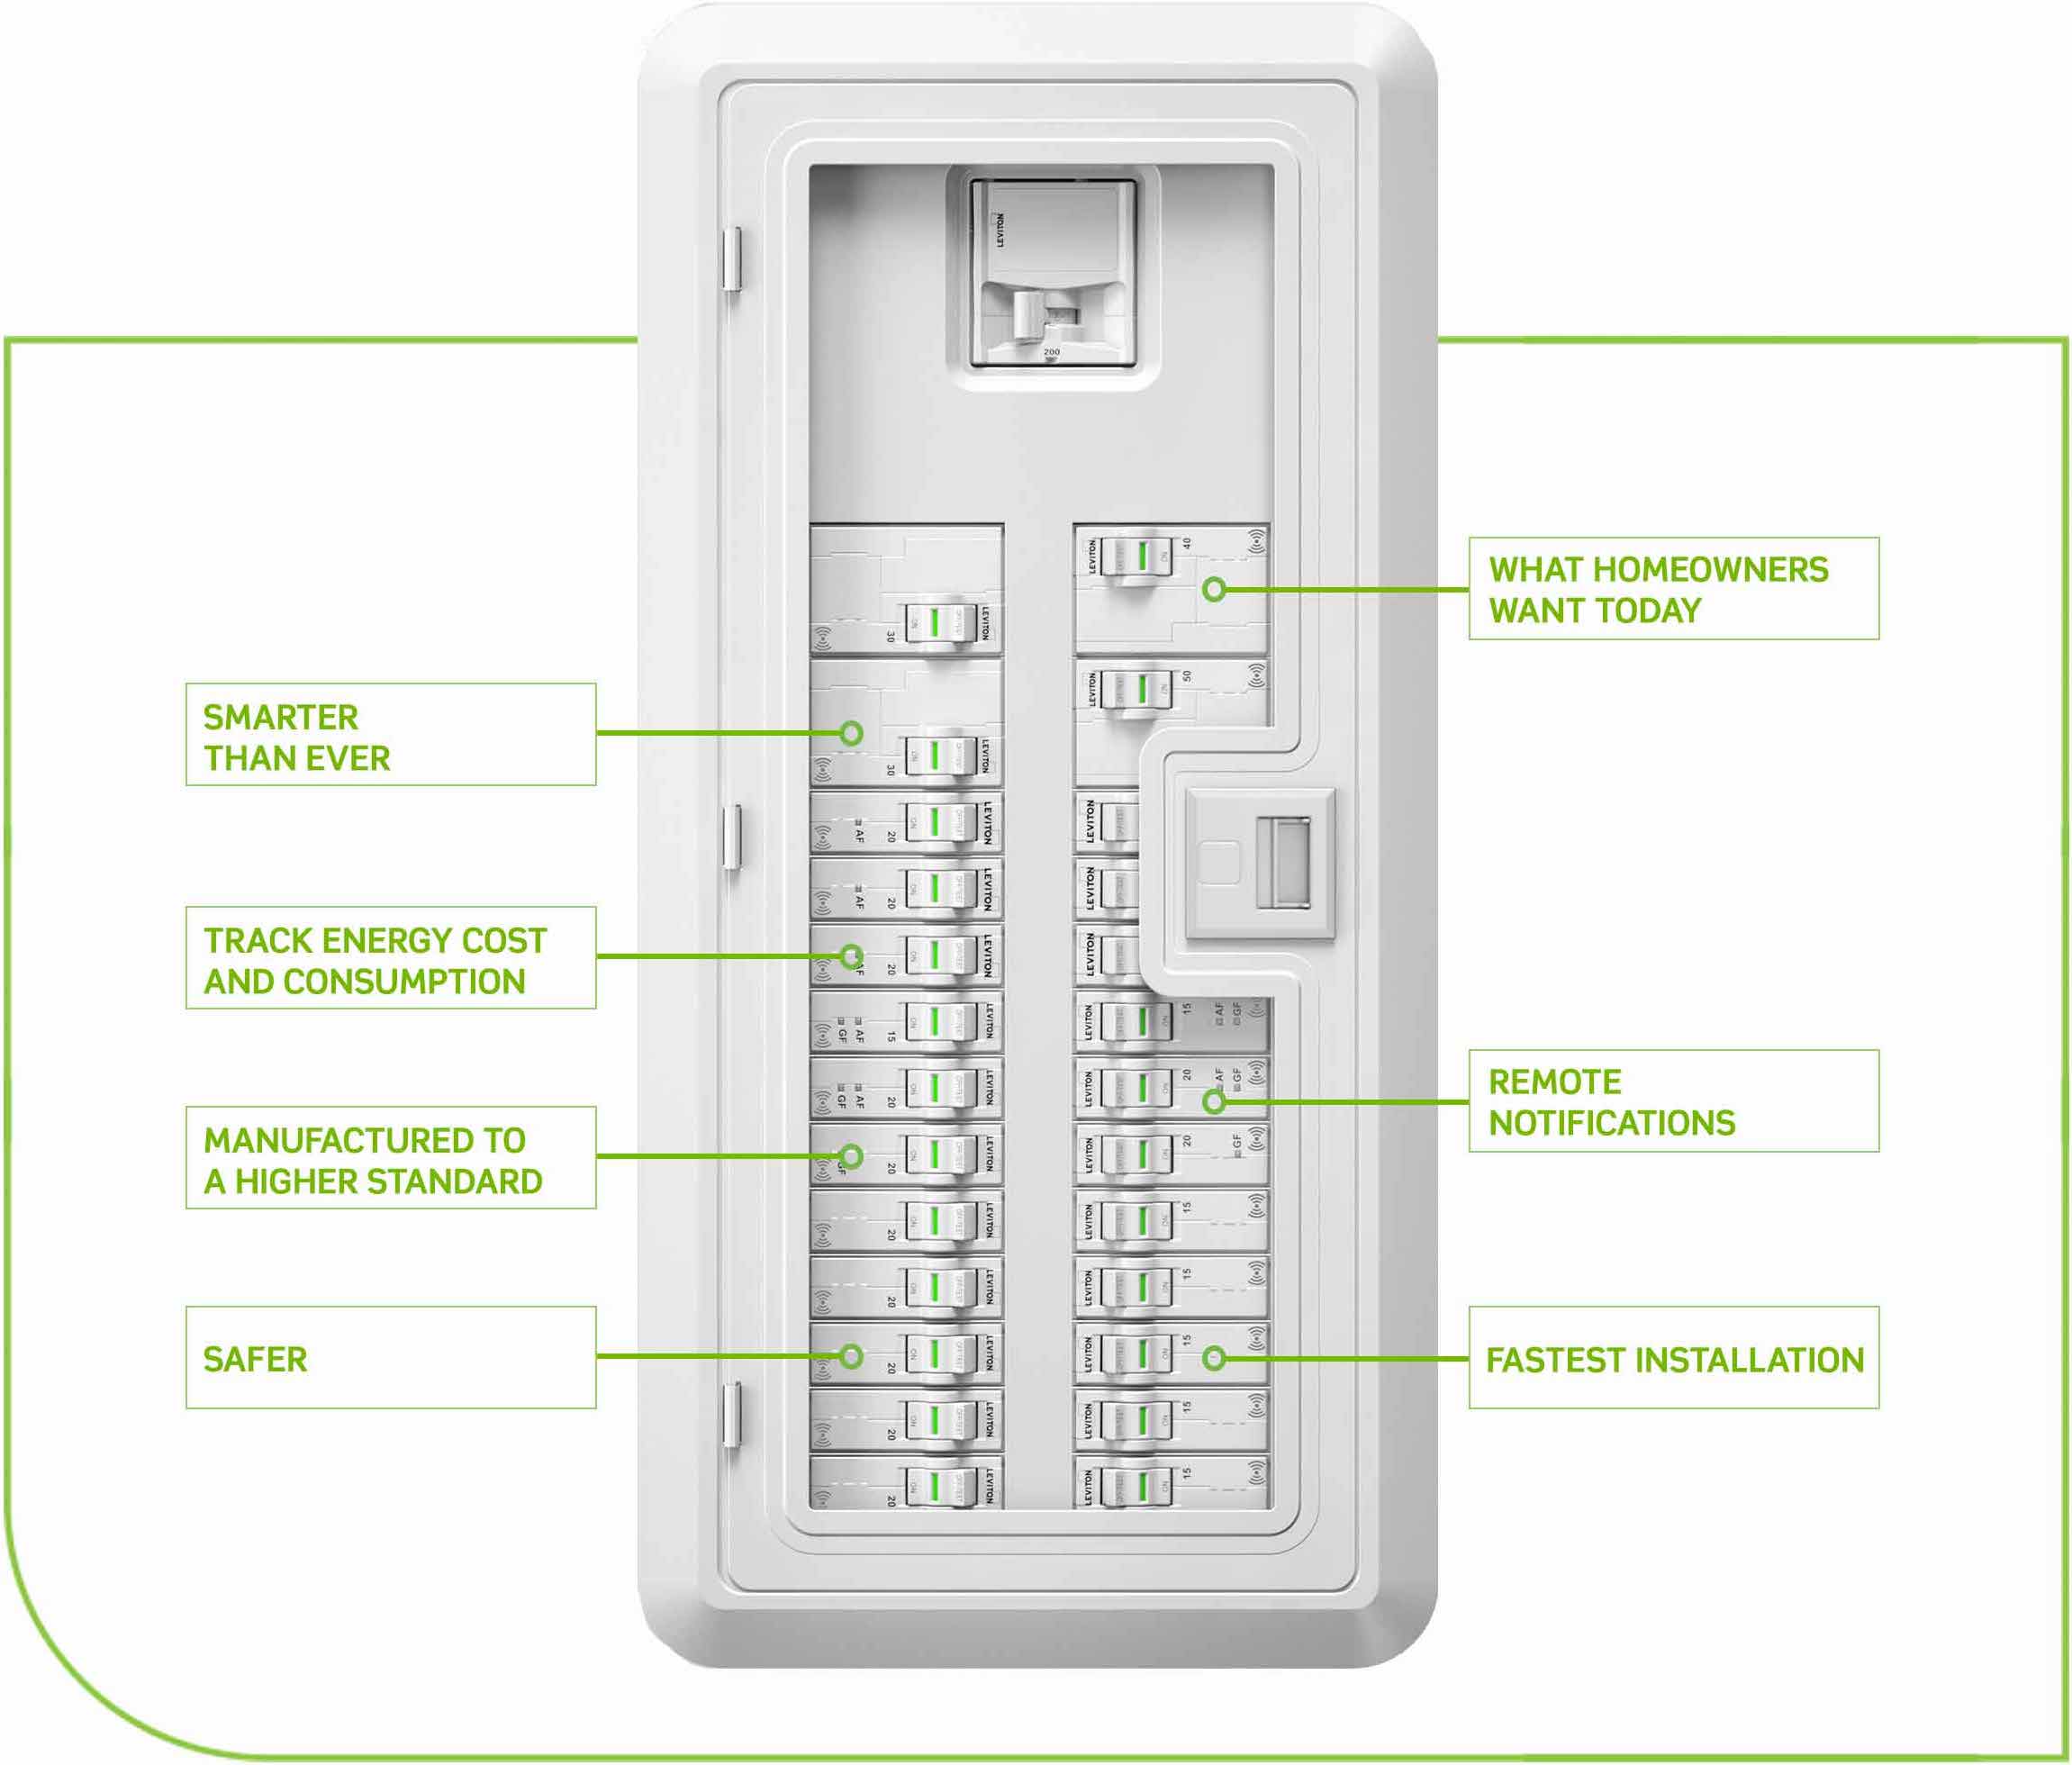 leviton load center canada - image of the leviton smart breaker panel